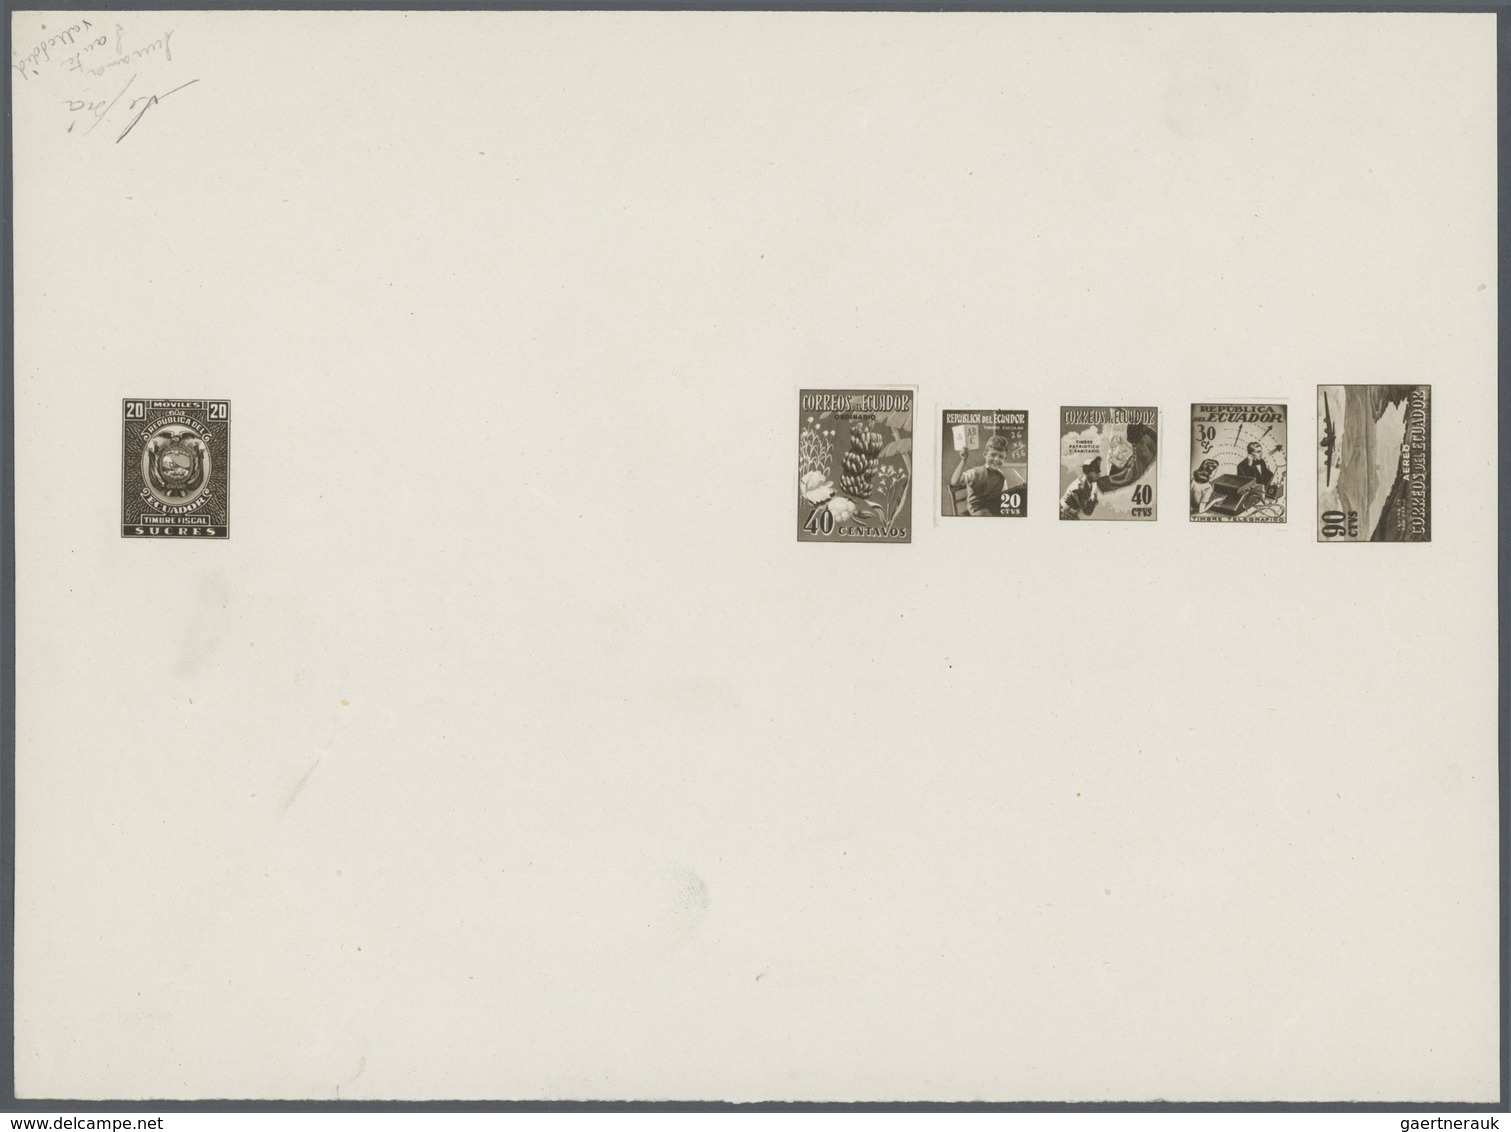 Ecuador: 1954/1955. Composite Sheet Bearing Color Proofs In BROWN For The Following Stamps: Definiti - Ecuador